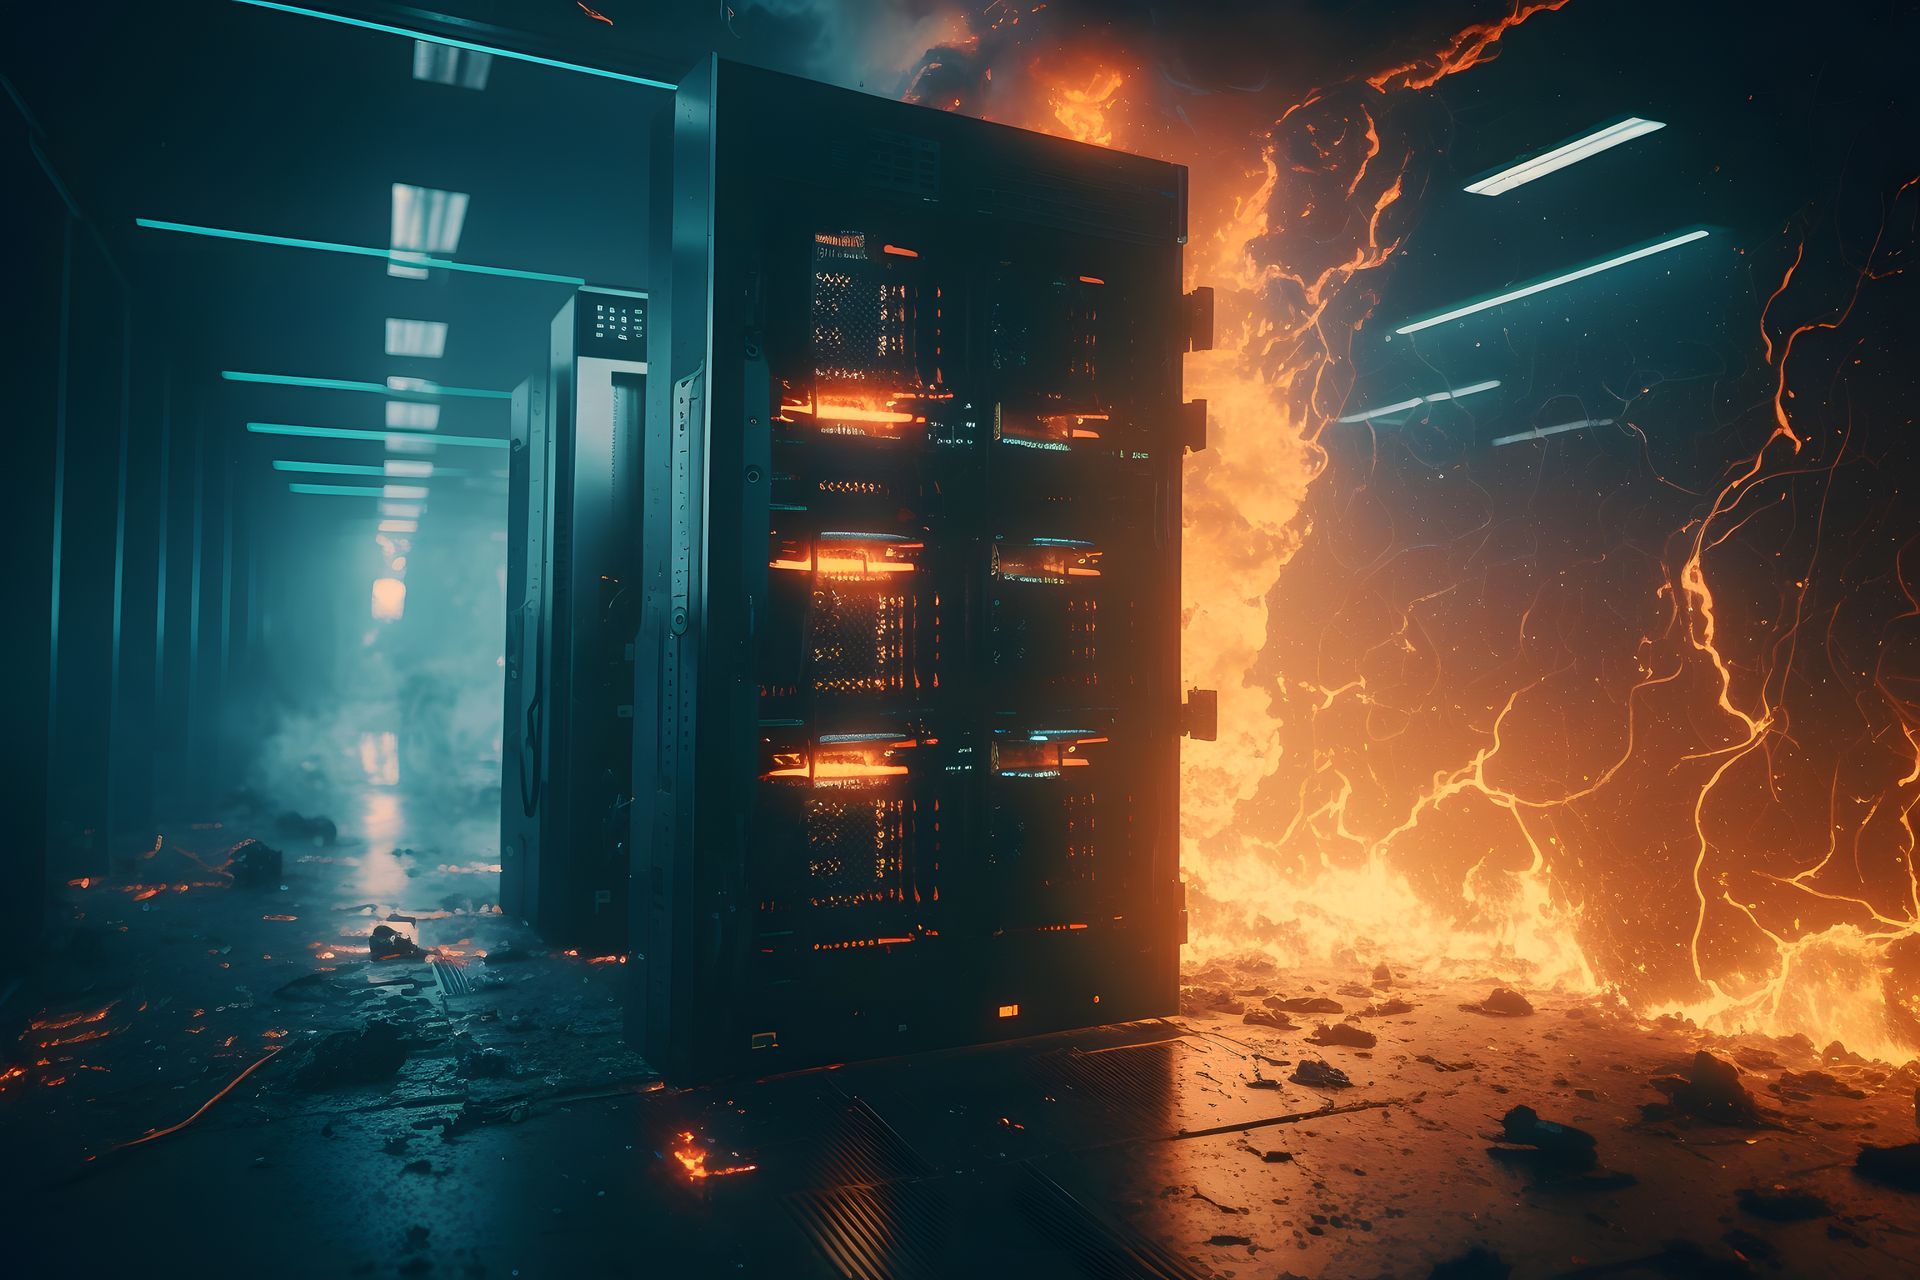 Data Center on Fire